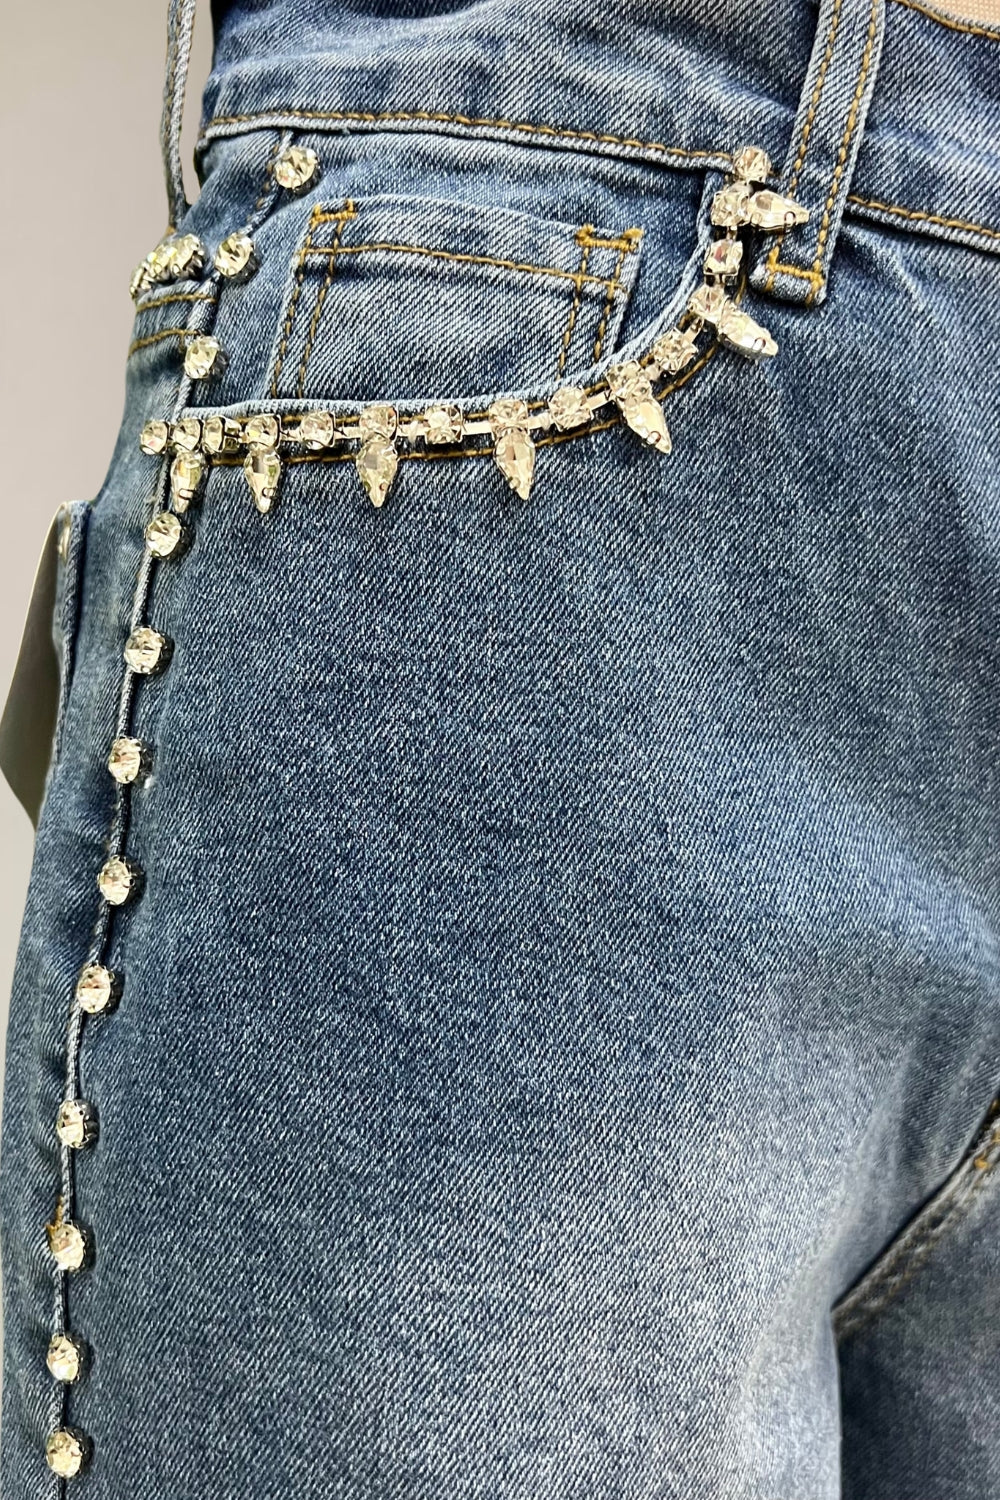 Sparkling Rhinestone Trimmed Jeans